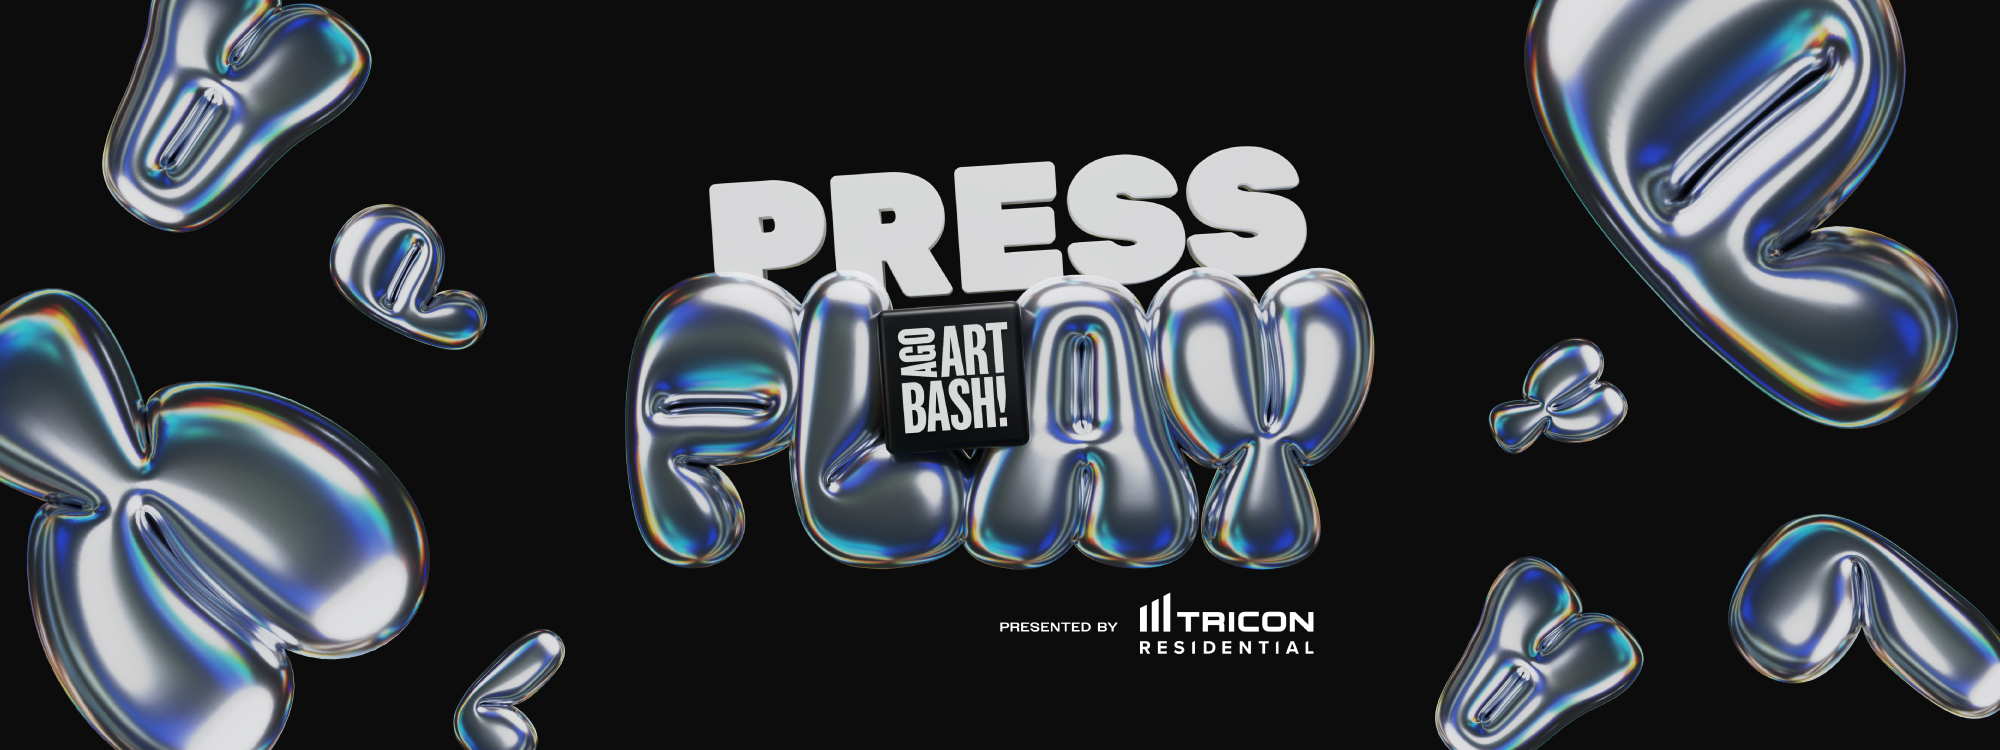 Press Play Media